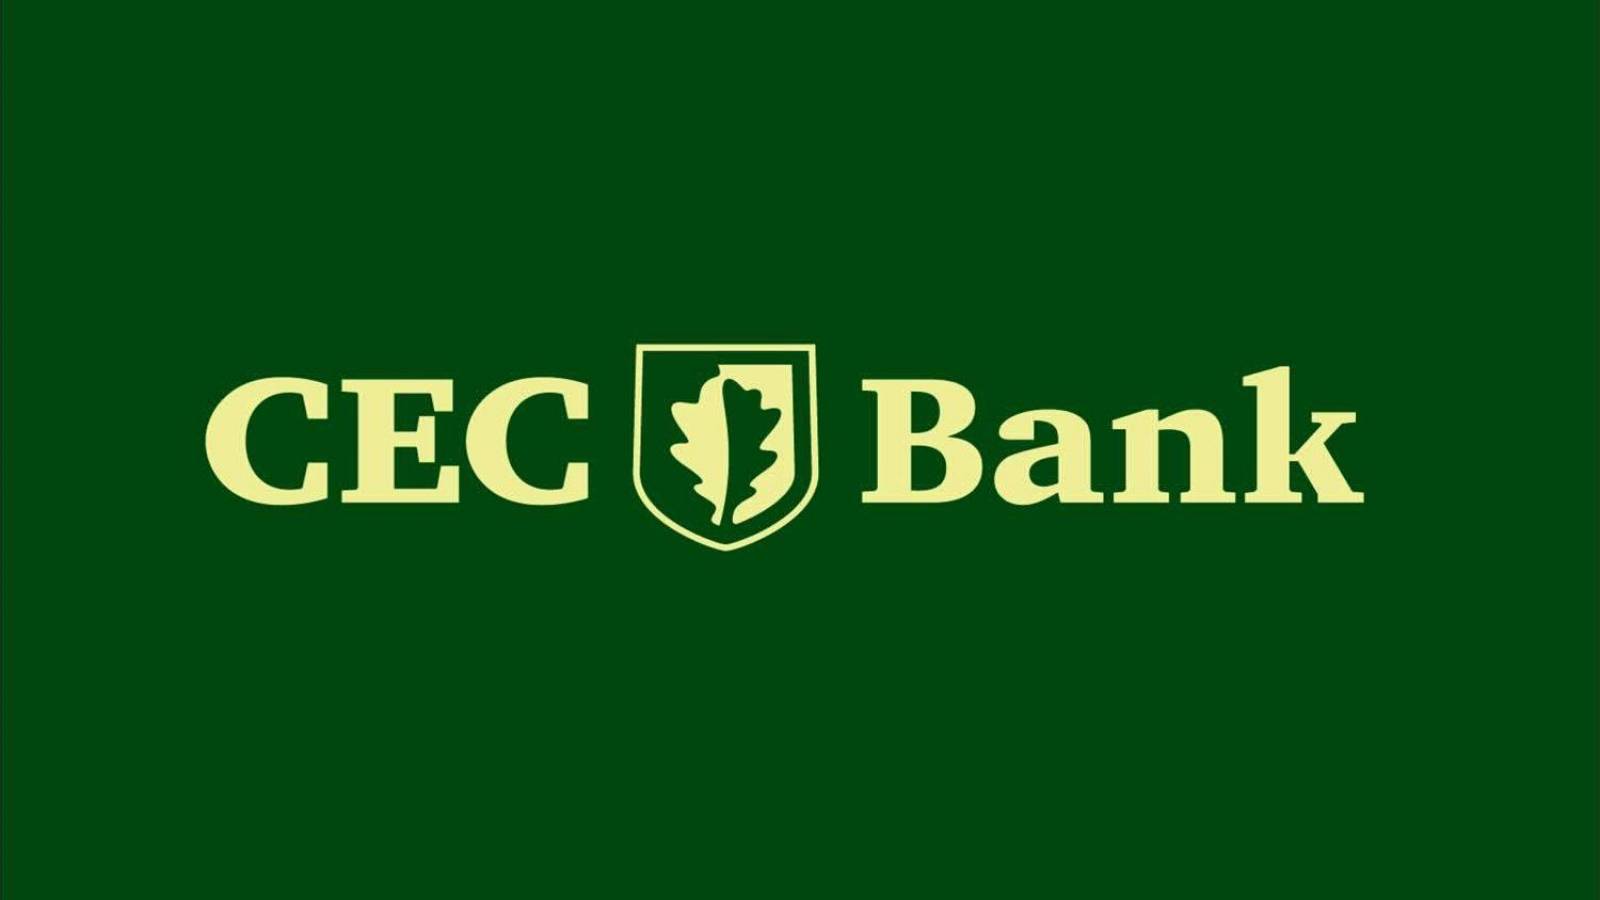 CEC Pankkitauko